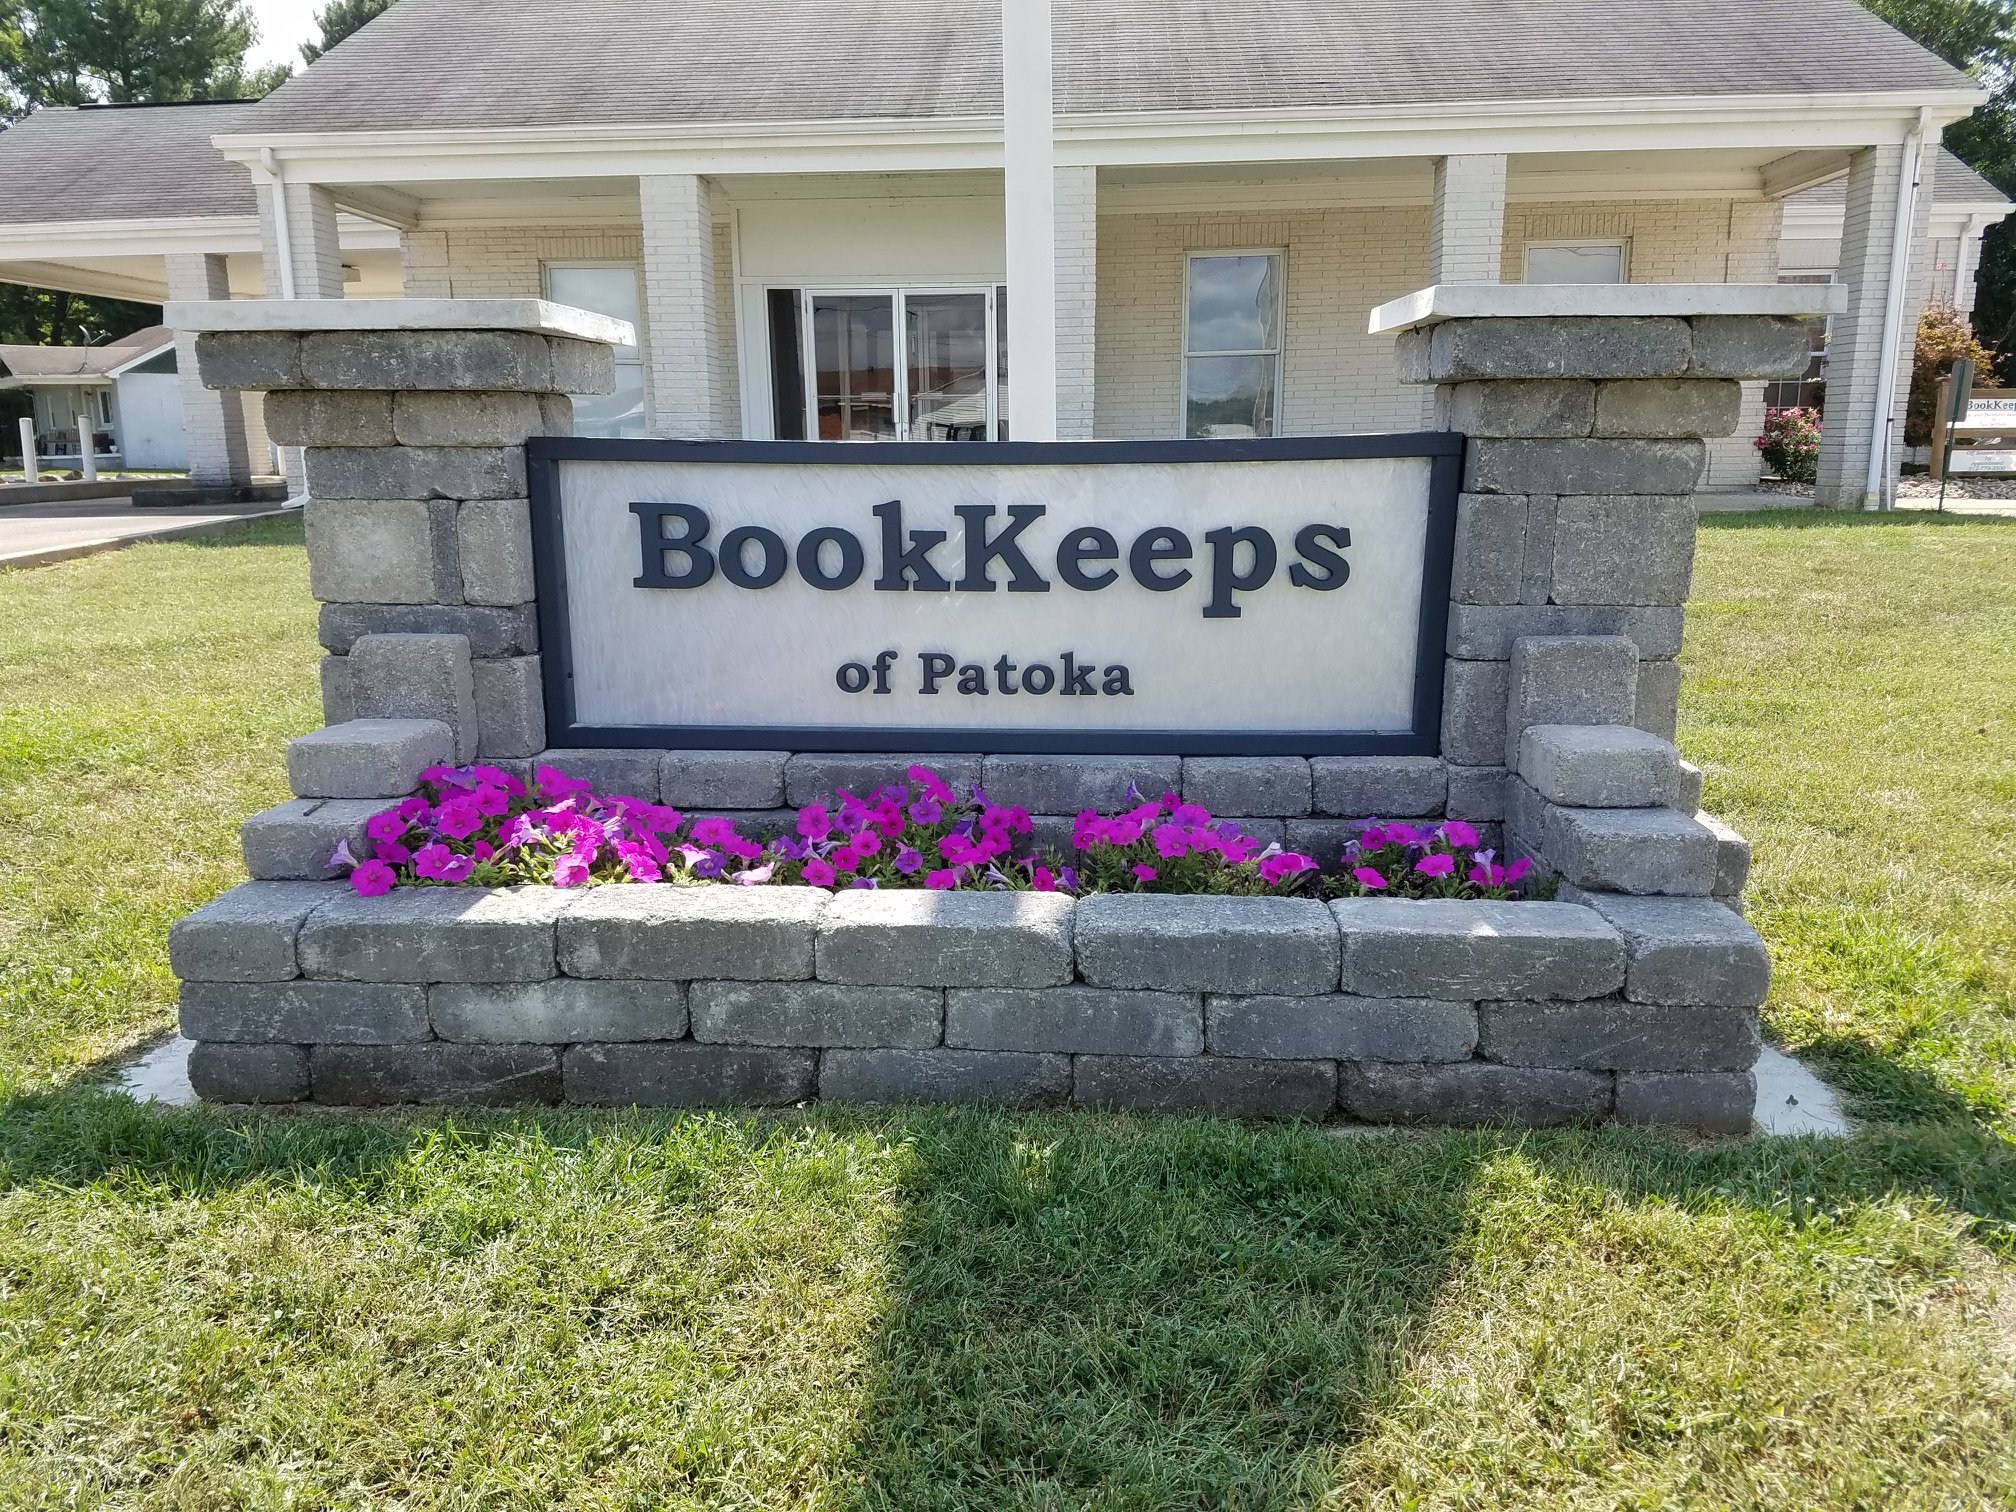 Bookkeeps of Patoka 416 W Grave St, Patoka Indiana 47666